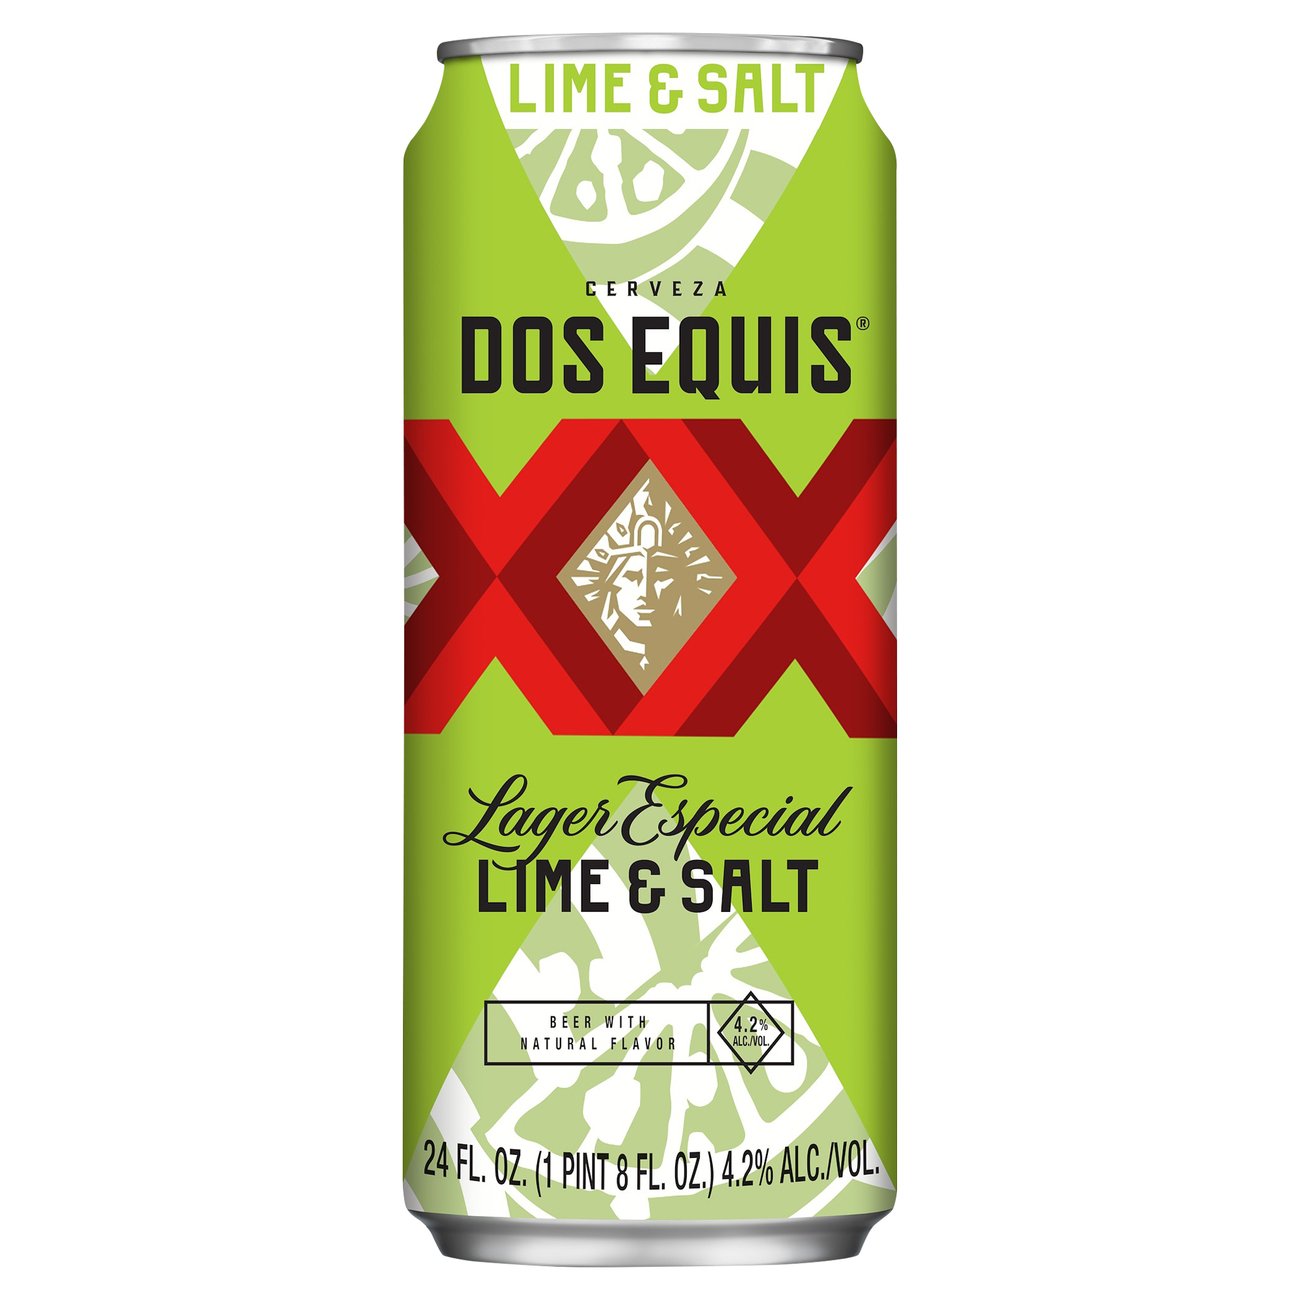 Dos Equis Lime Salt Lager Especial